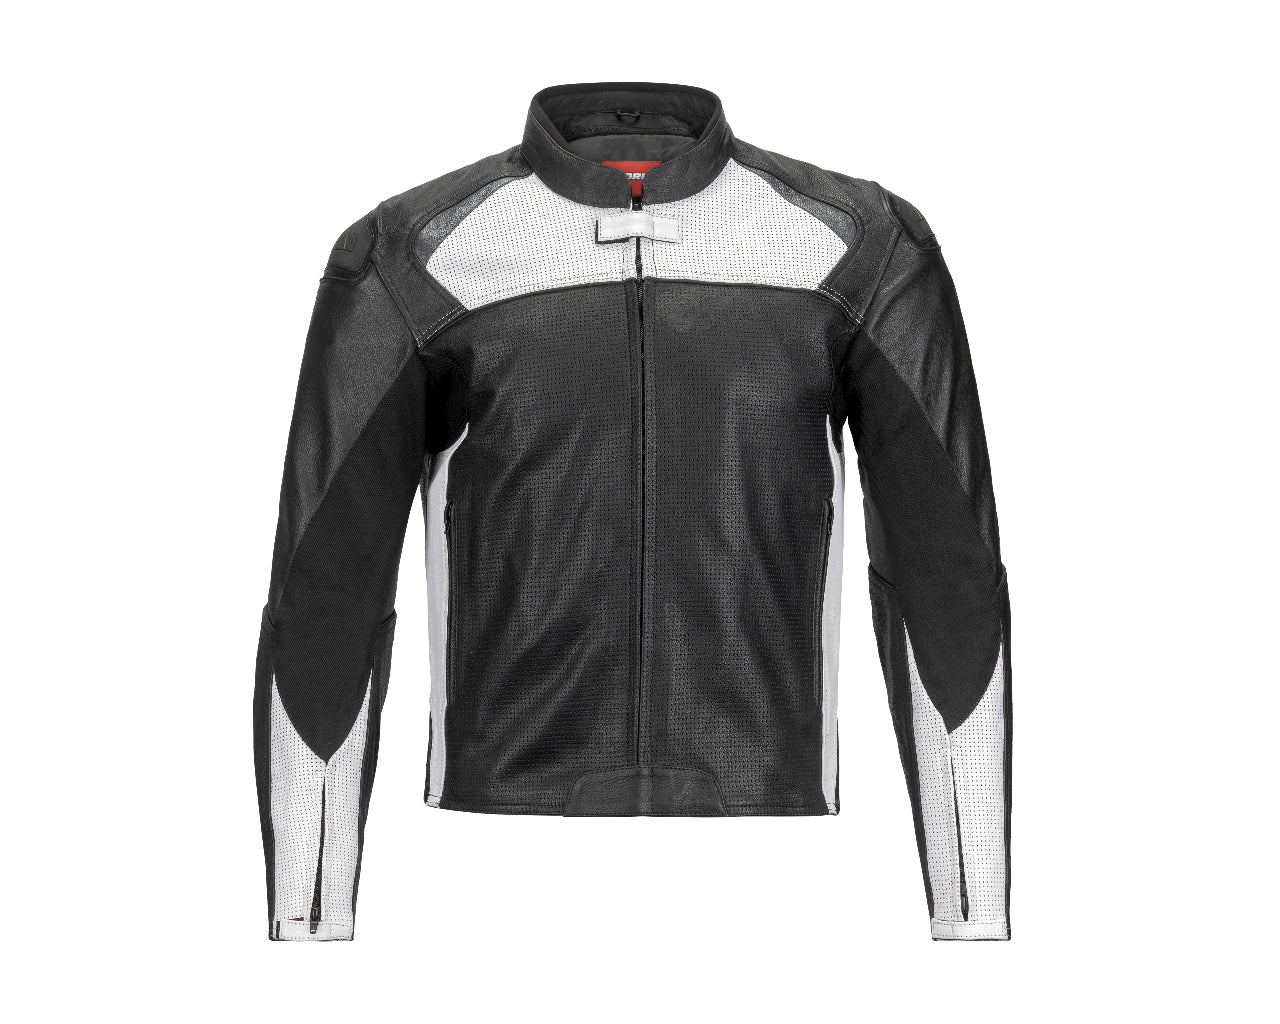 Noru Maruchi Leather Jacket Black/White – Koup's Cycle Shop